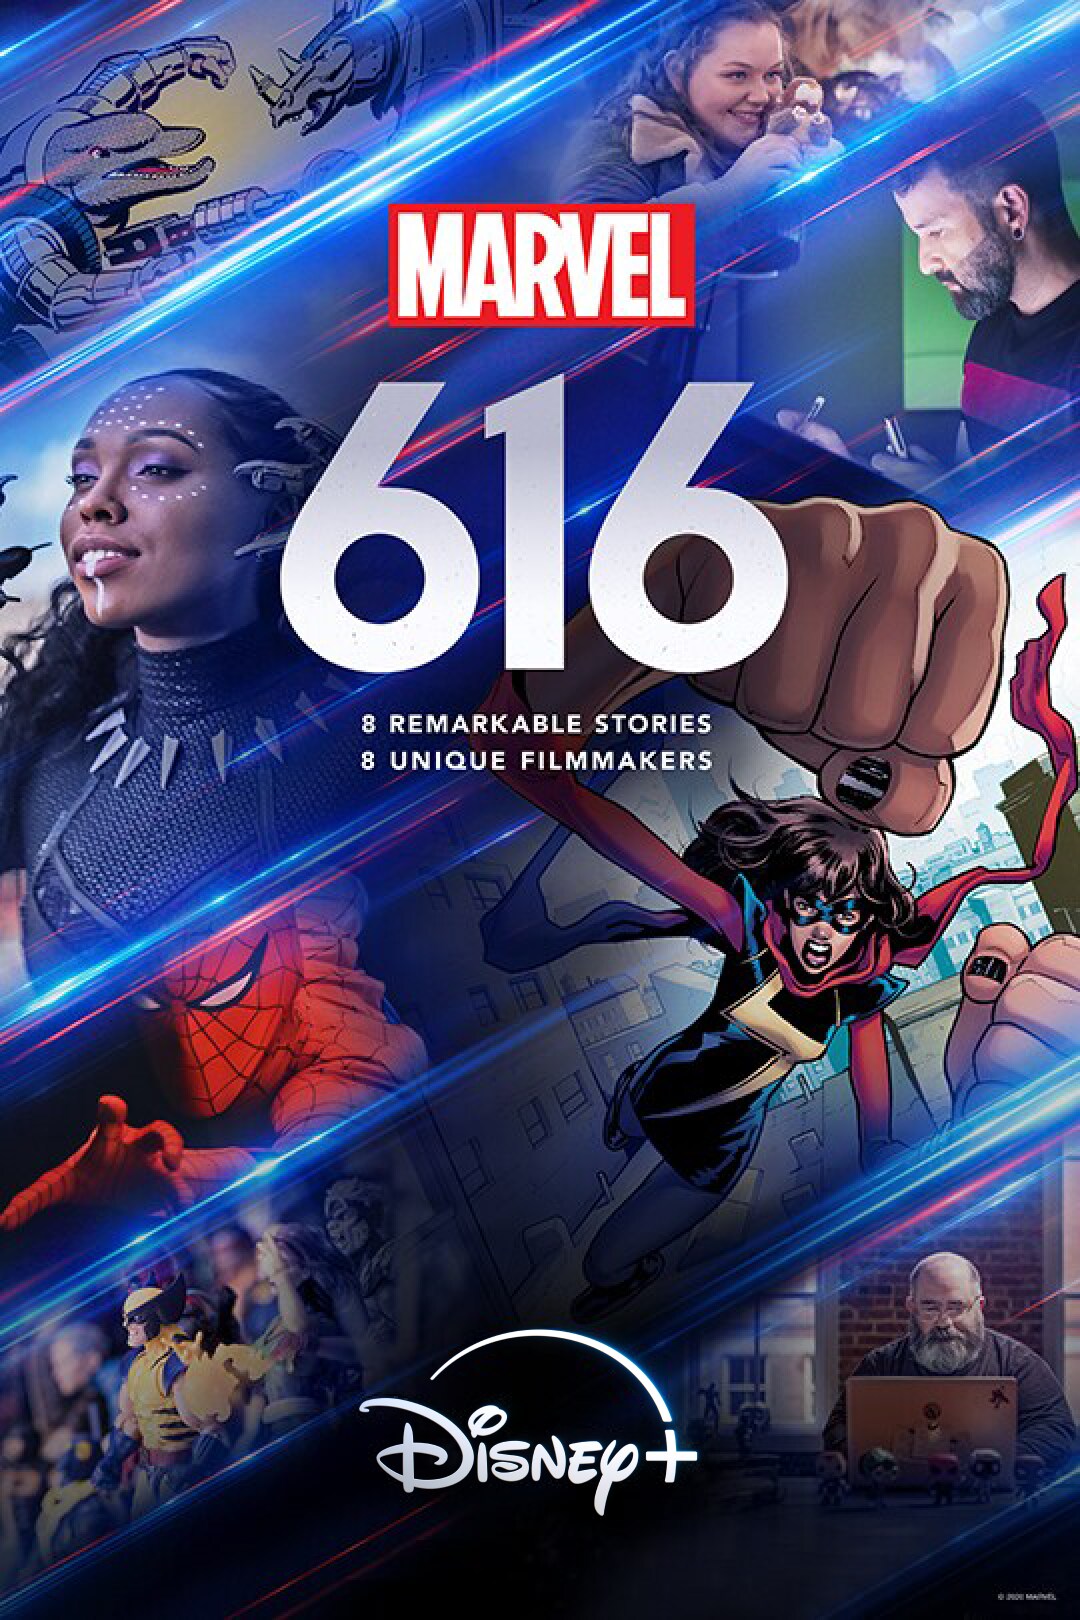 Marvel | 616 | 8 remarkable stories | 8 unique filmmakers | Disney+ | poster